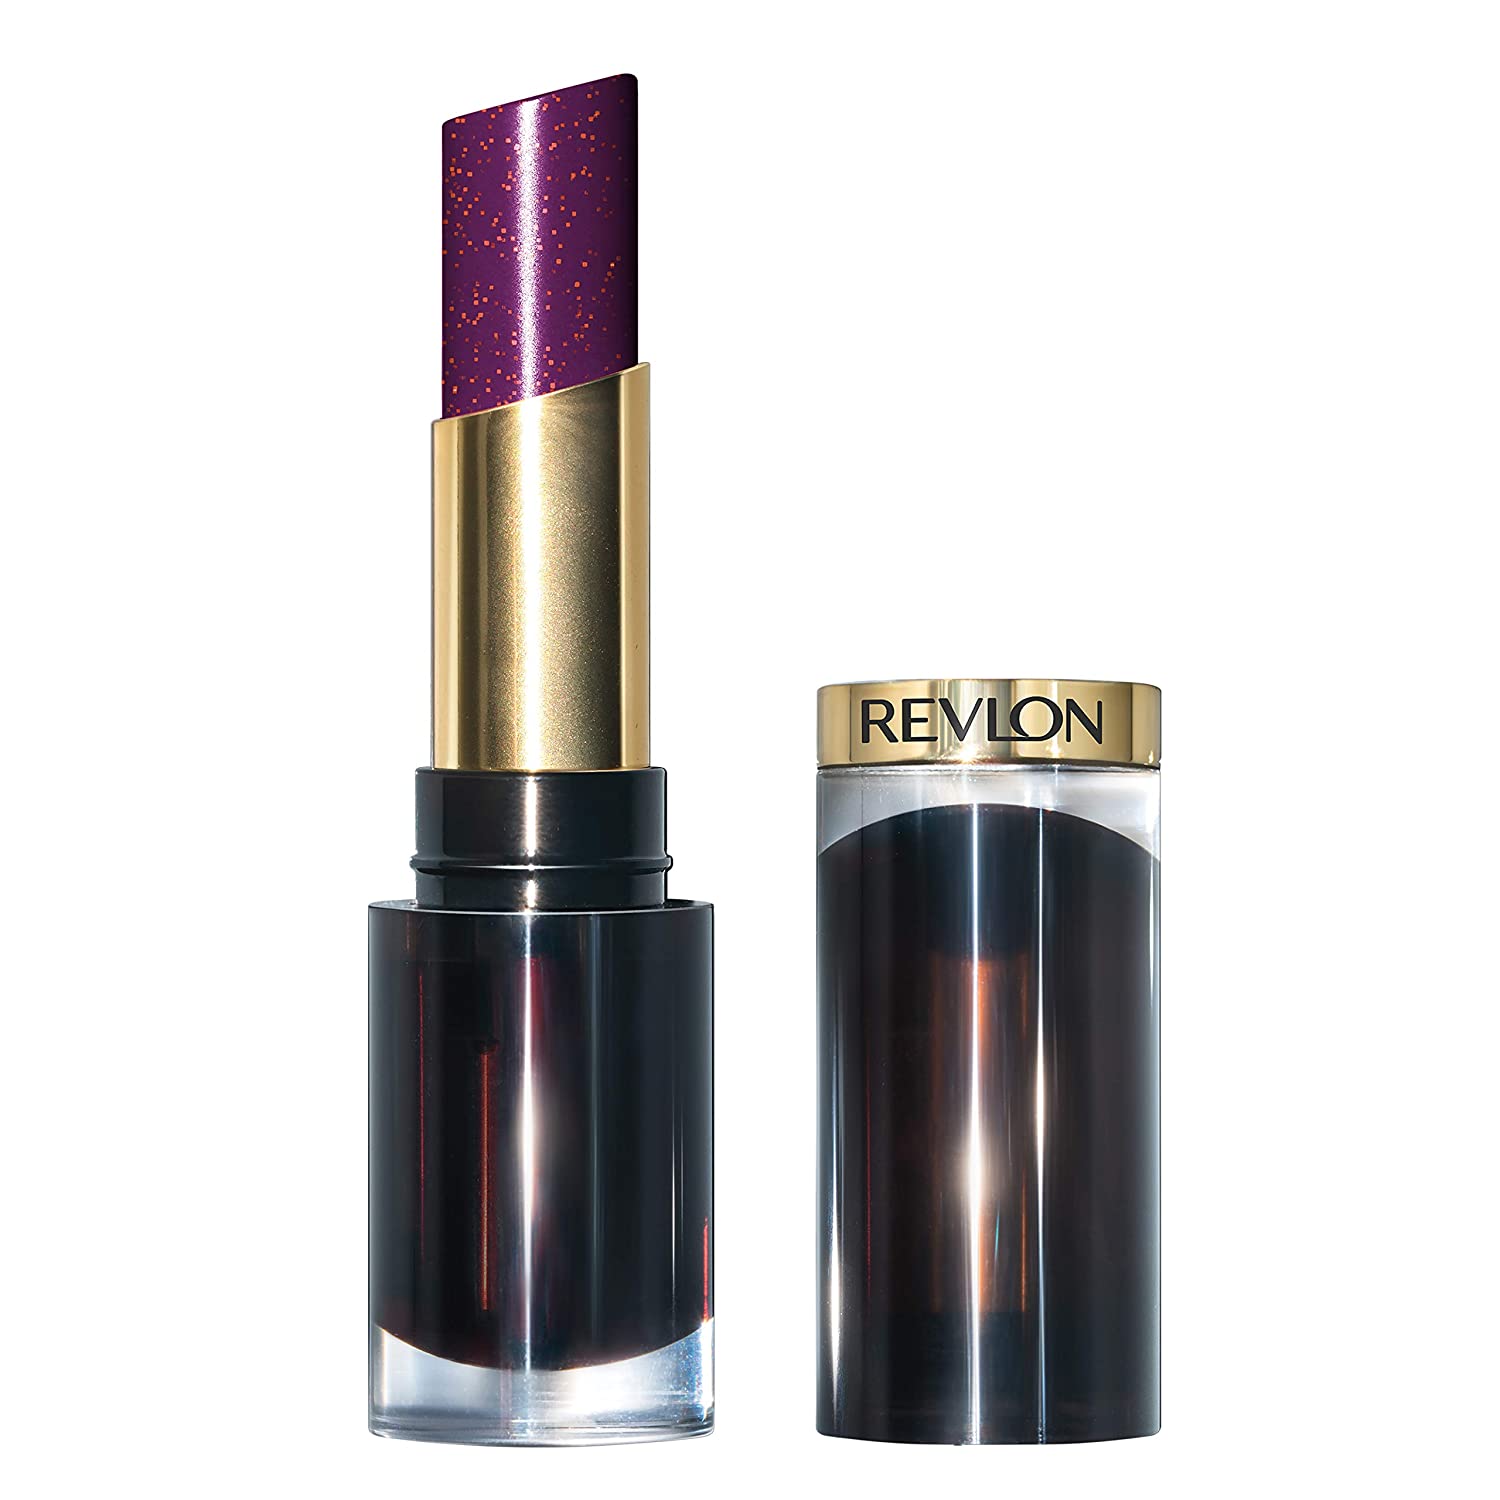 Revlon Super Lustrous Glass Shine Lipstick (Sleek Mulberry) $2.15 w/ S&S + Free S&H w/ Prime or $25+